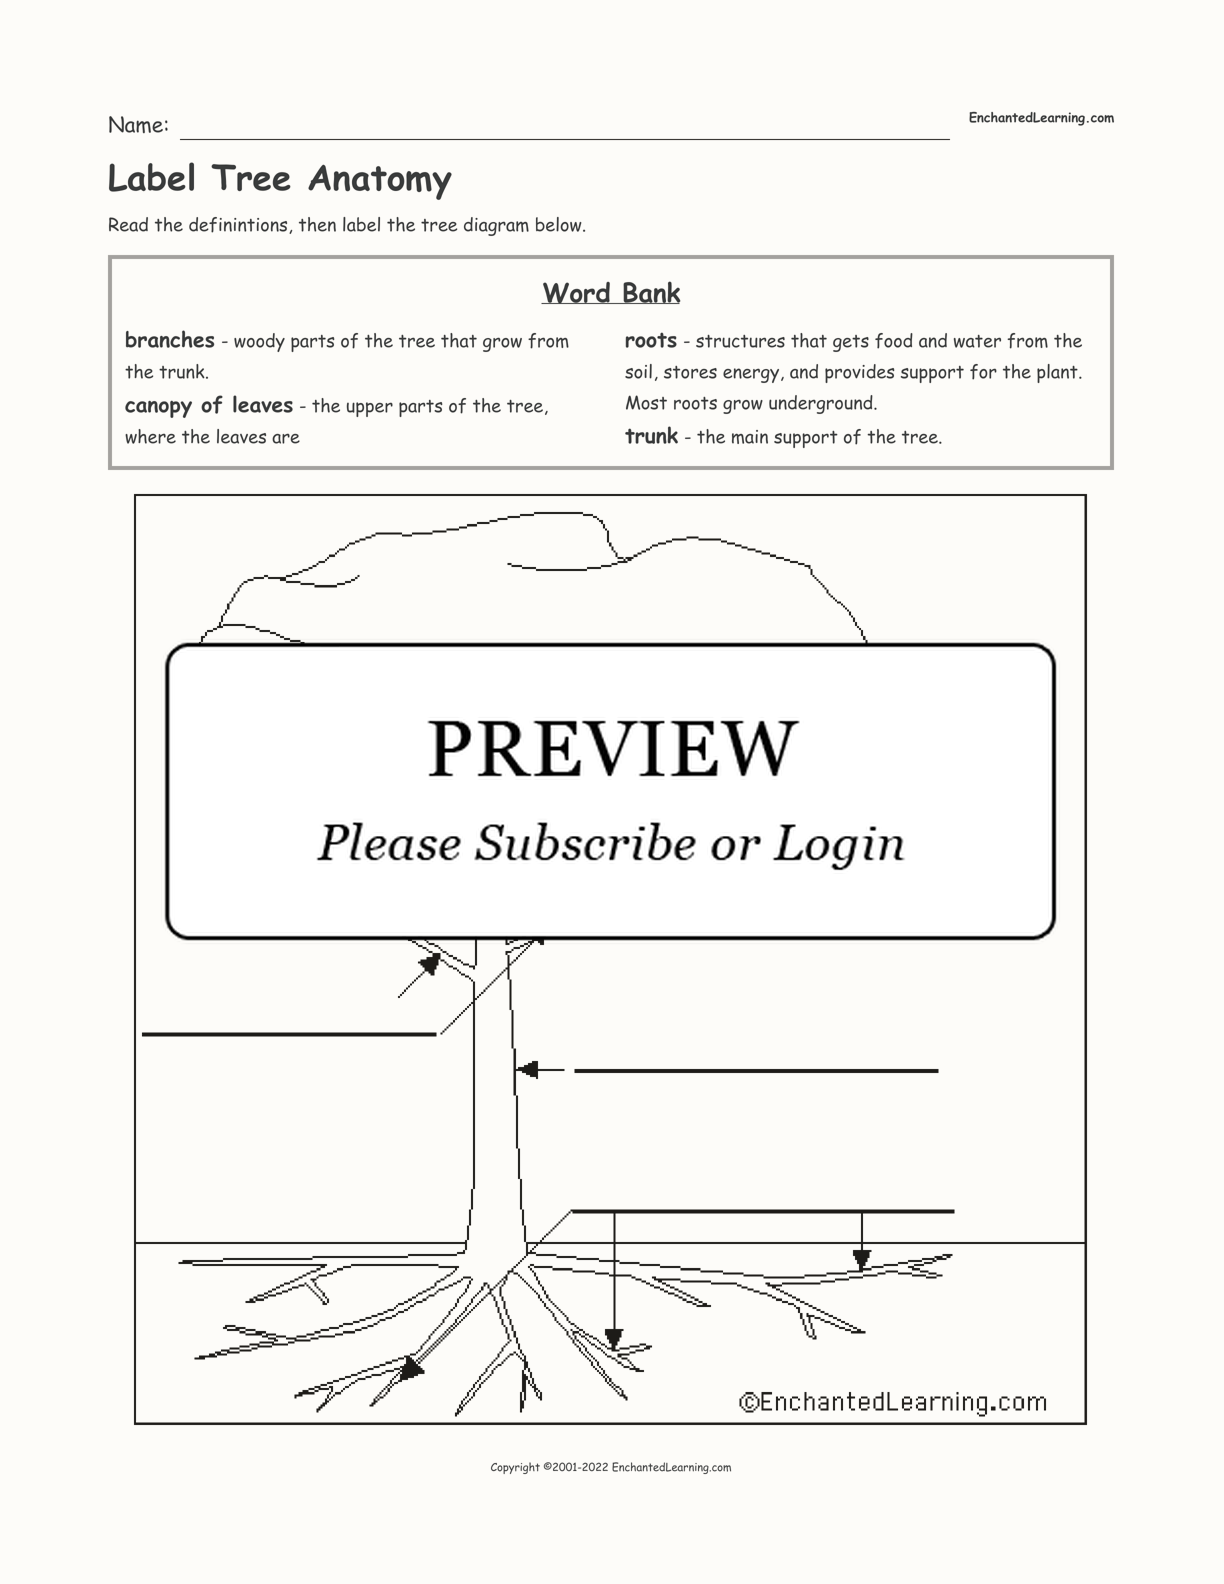 Label Tree Anatomy Enchanted Learning